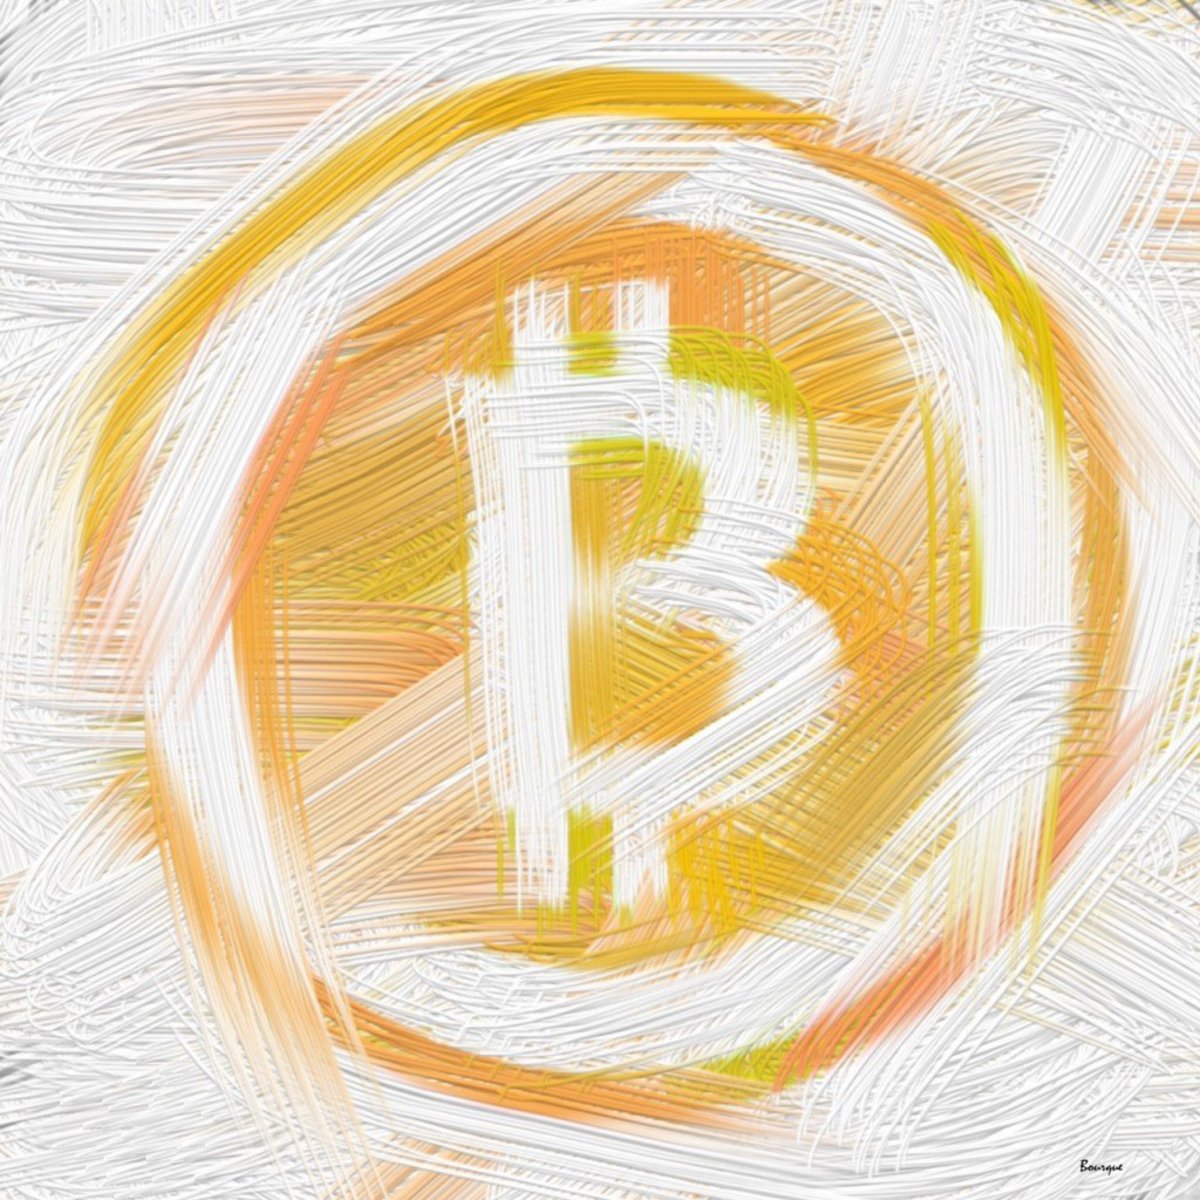 Art entitled “The Art of Bitcoin”